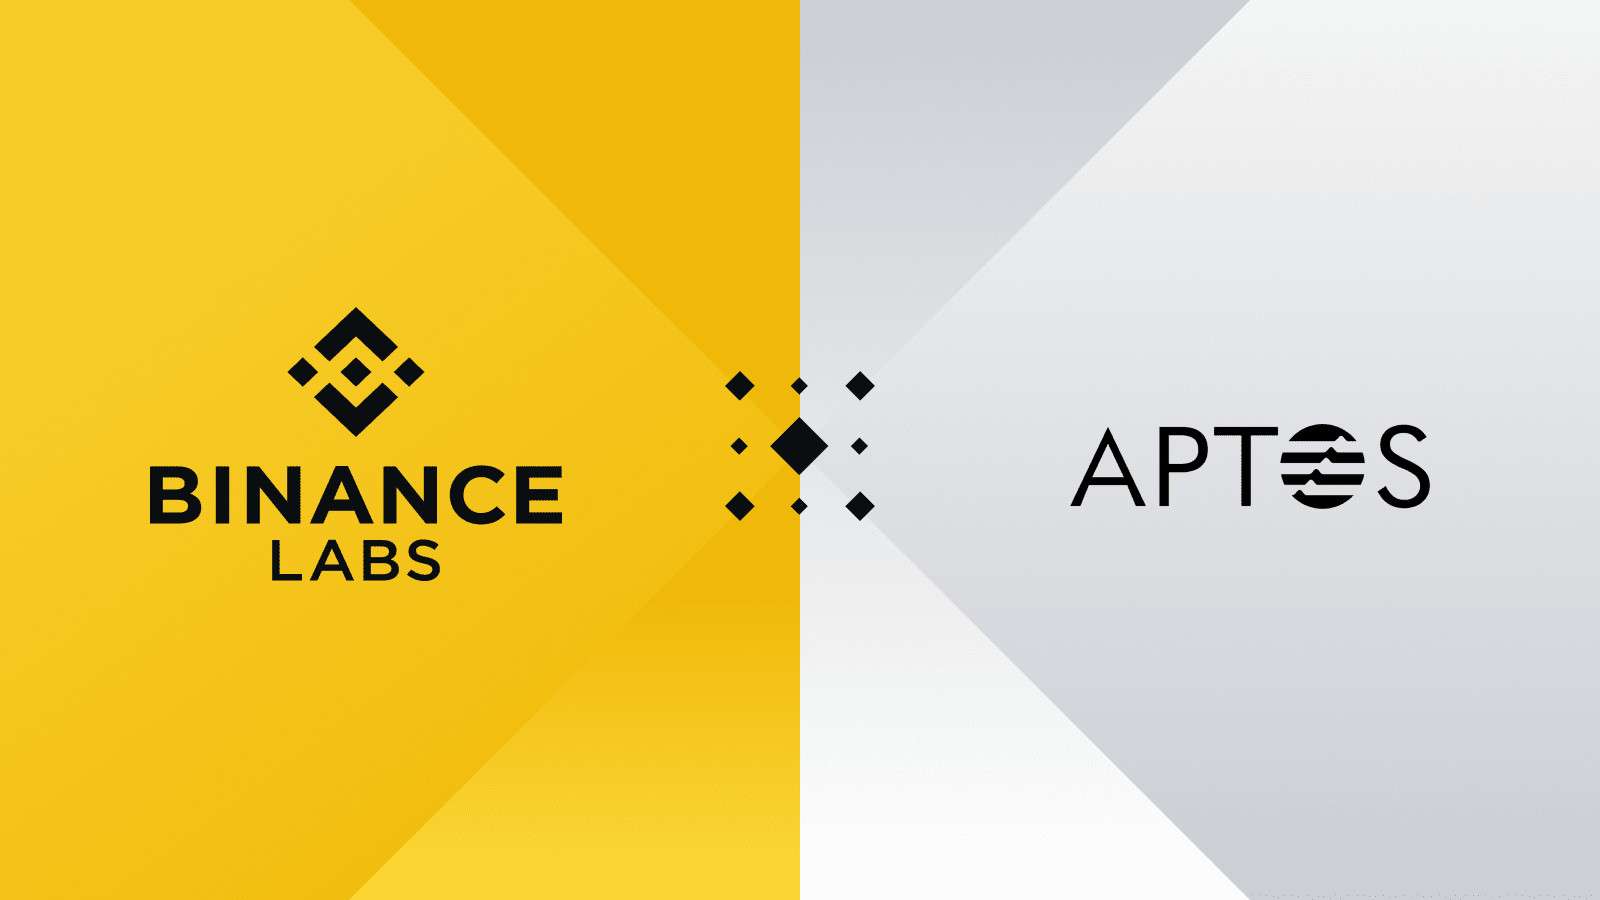 Investors and partners of Aptos